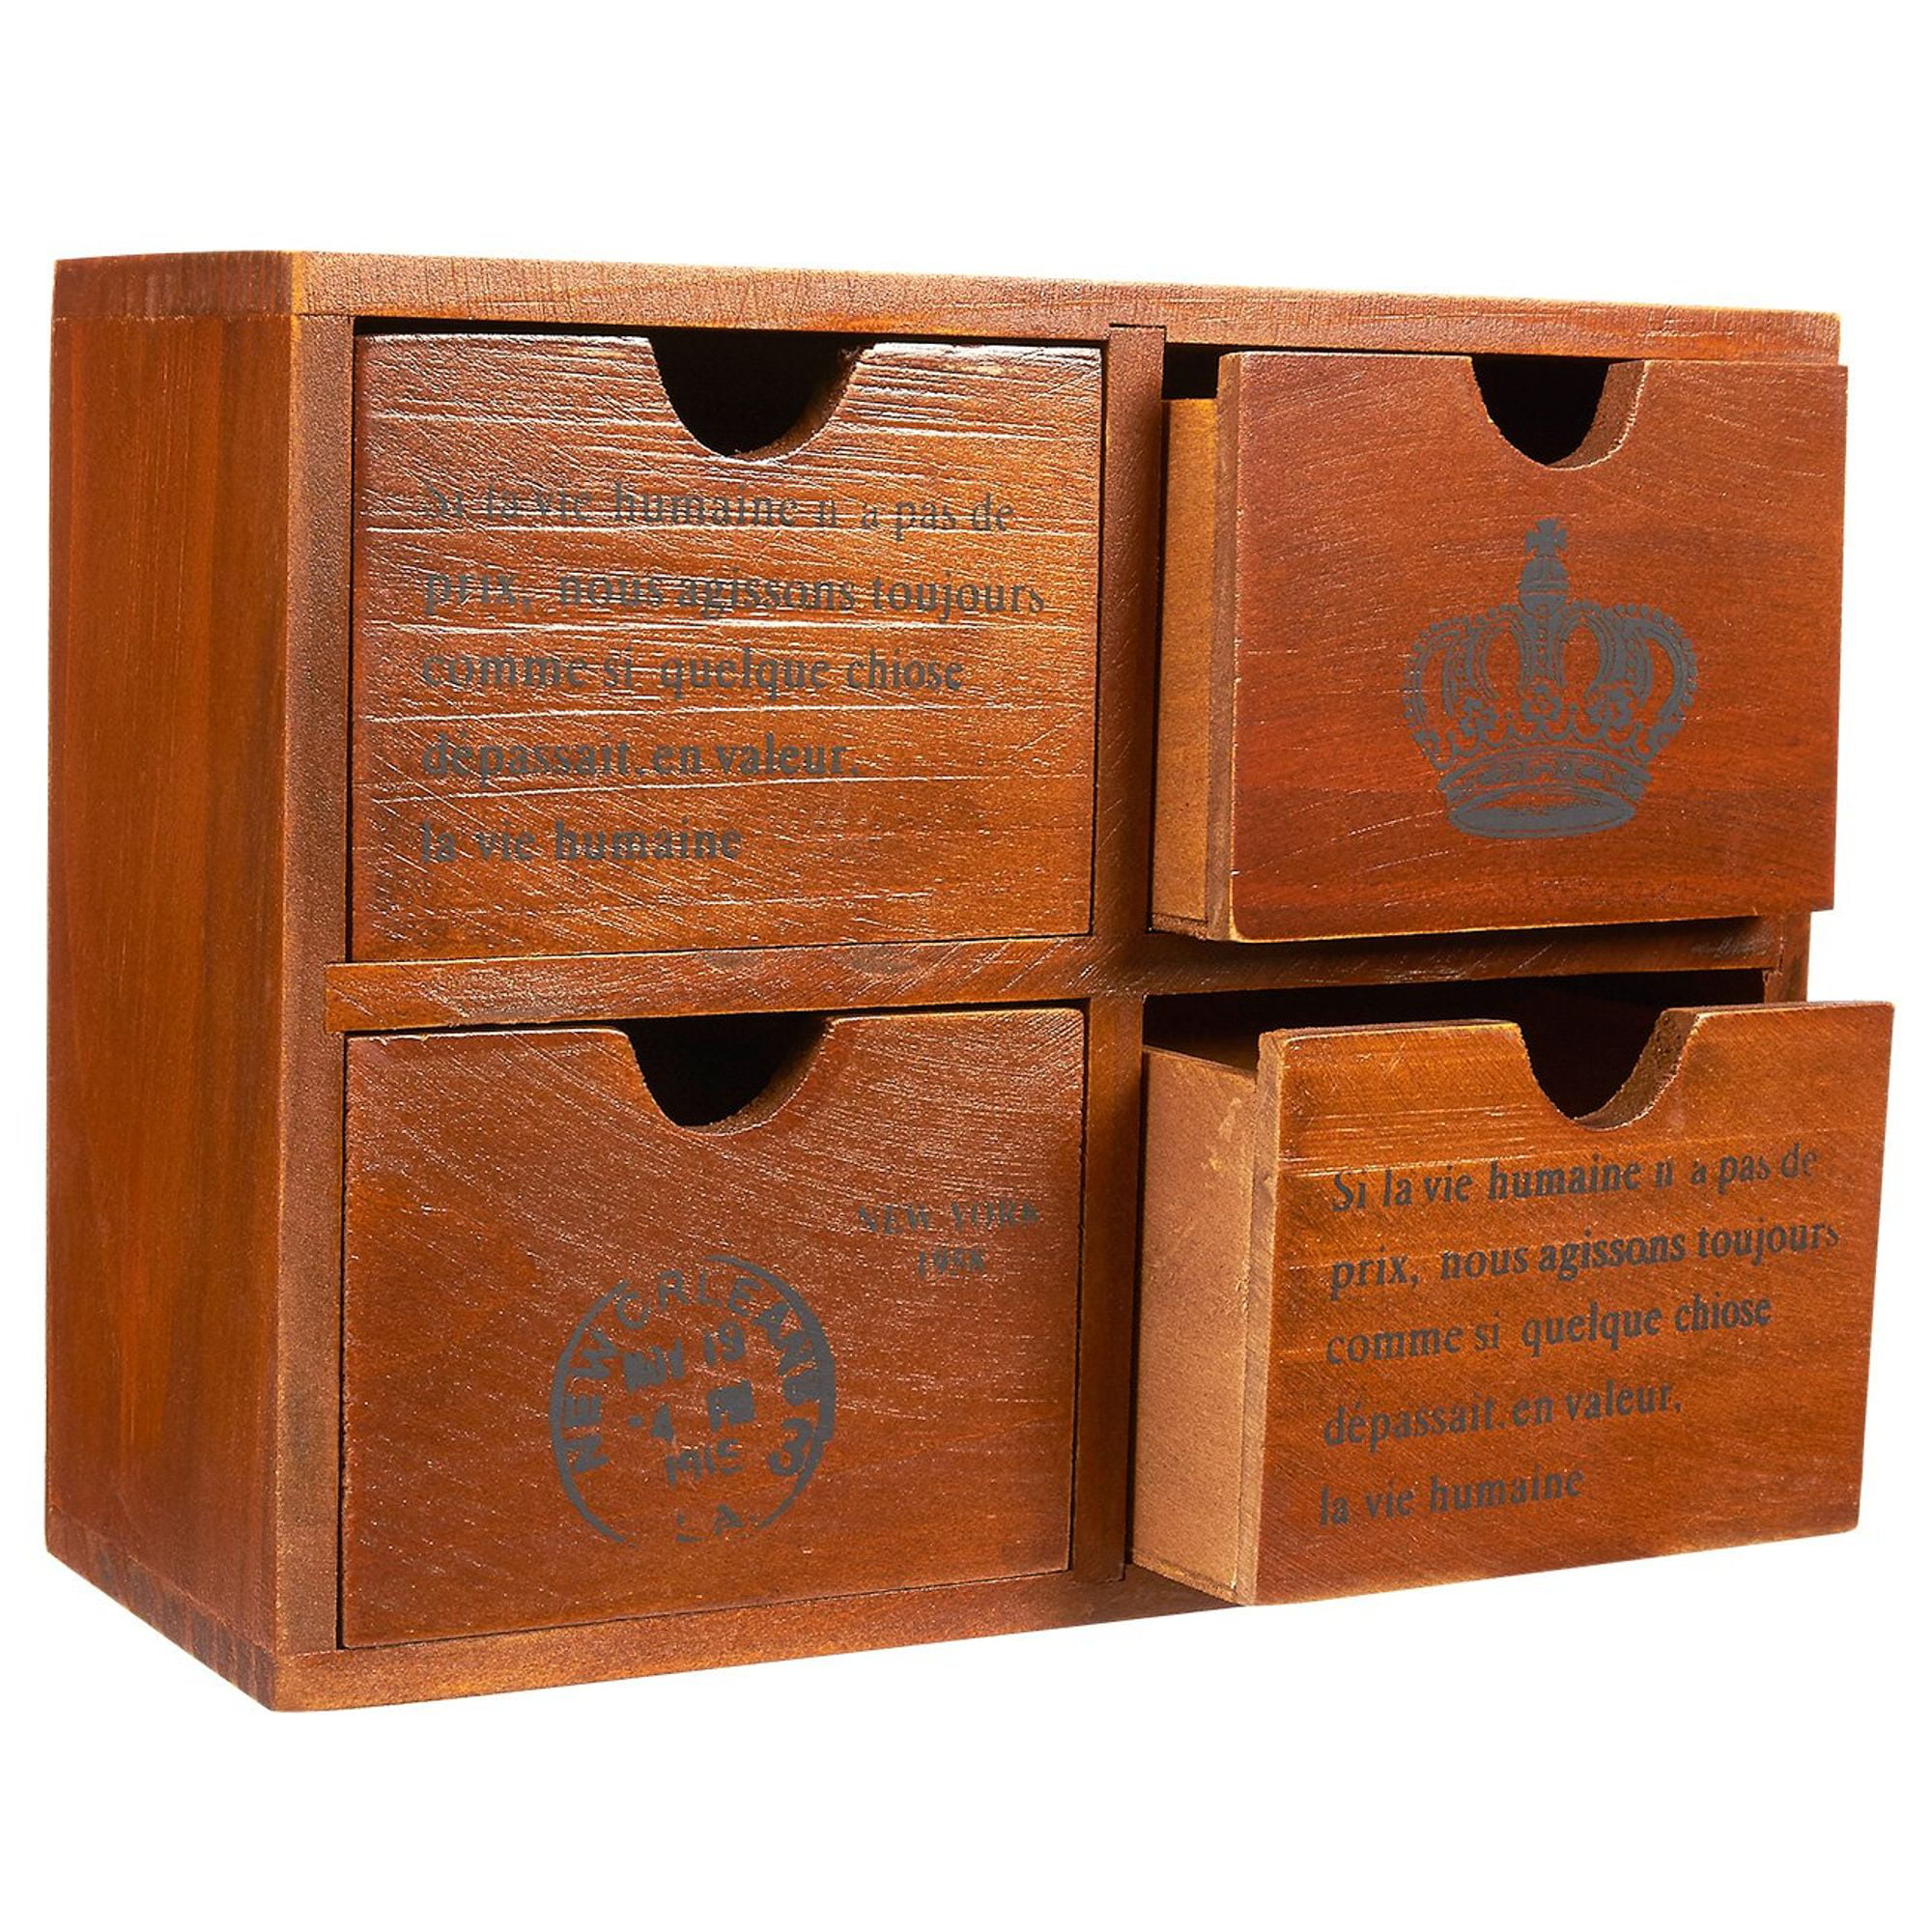 4 Drawer Wooden Storage Organizer Small Desktop Decorative Boxes for Craft, Vintage